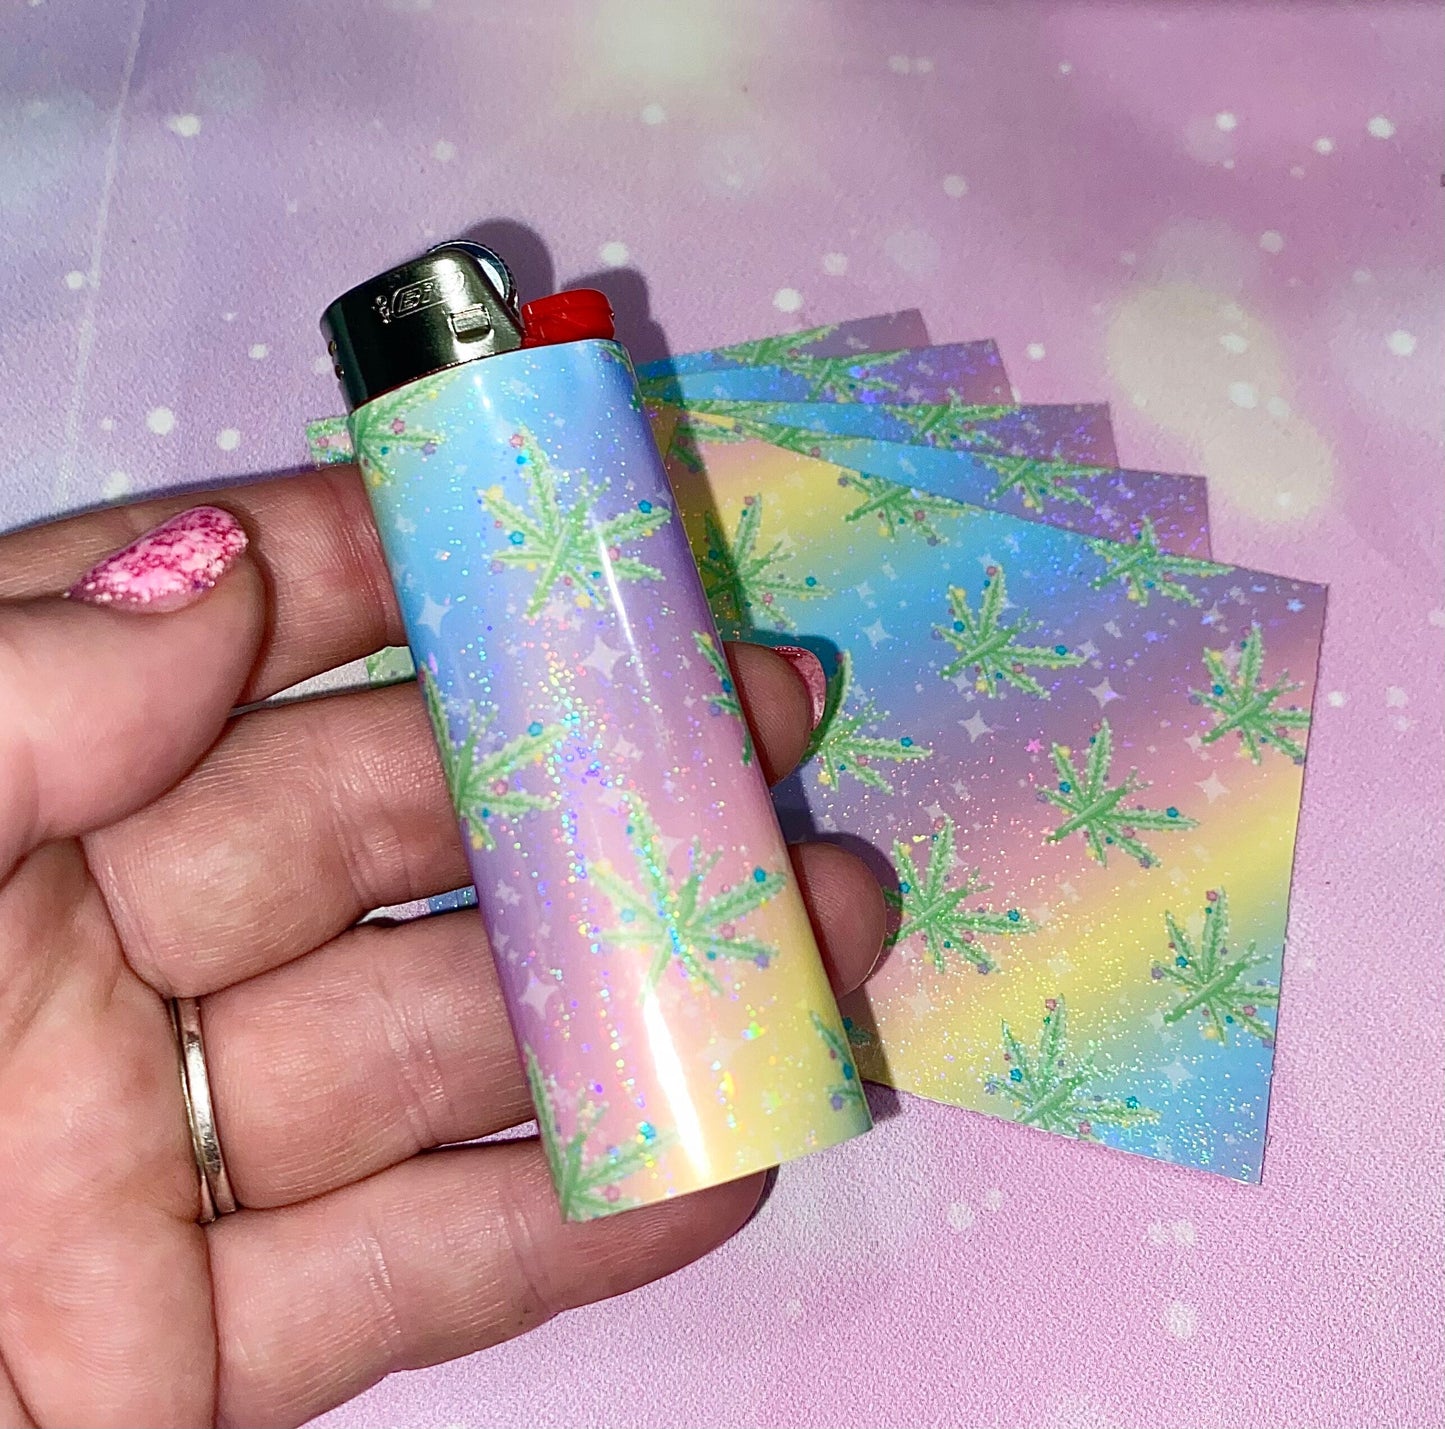 Canna-Fly Lighter Wrap | cannabis lighter wrap, Kawaii lighter wraps, lighter wraps, Cannabis art, weed stickers, Kawaii, stickers